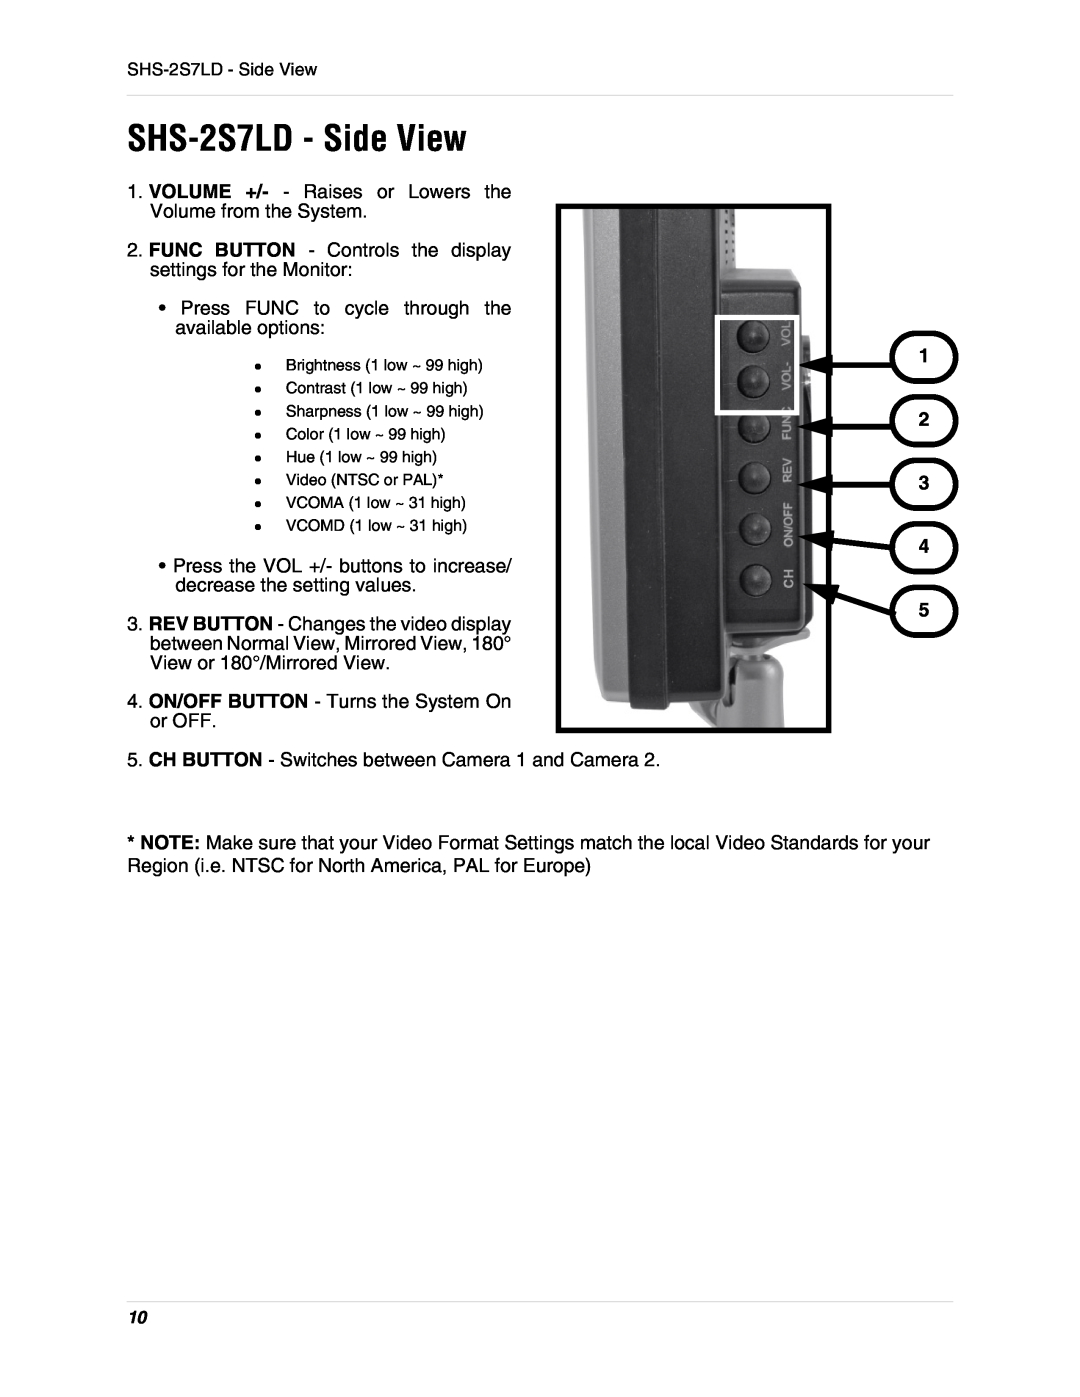 LOREX Technology SHS-2S7LD Series instruction manual SHS-2S7LD- Side View, 1 2 3 